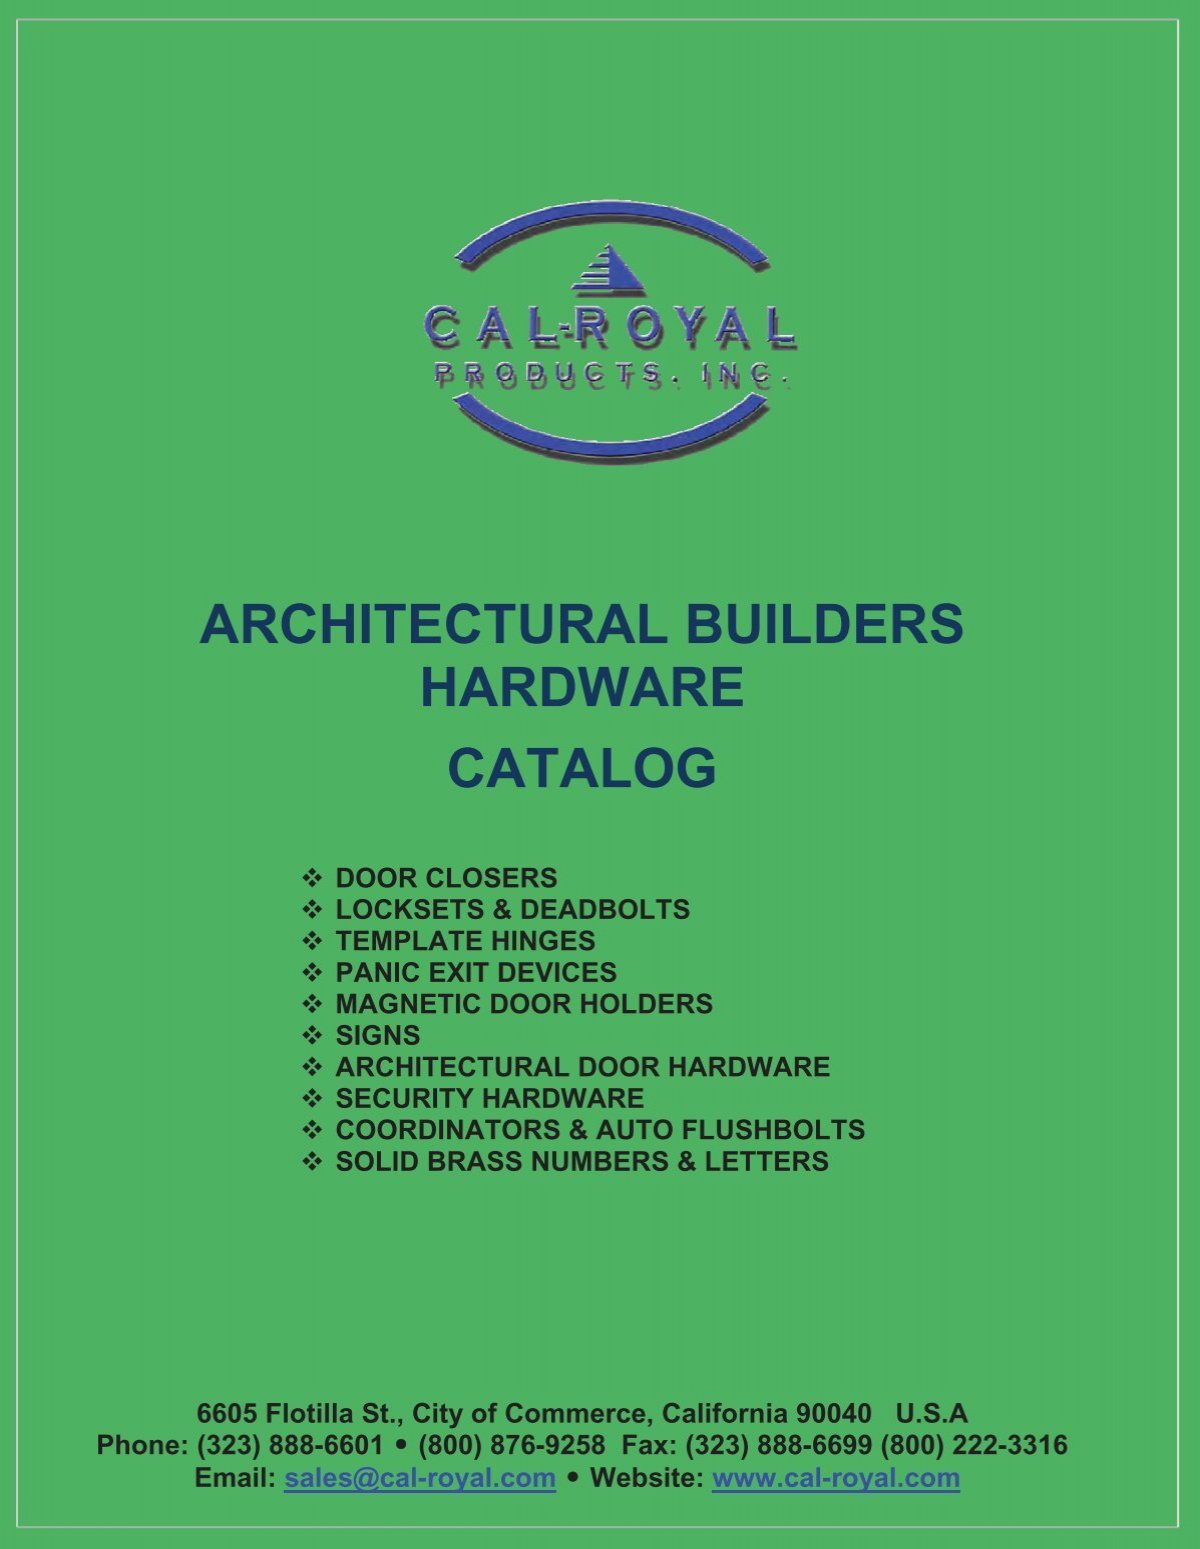 ARCHITECTURAL BUILDERS HARDWARE CATALOG - Cal-Royal